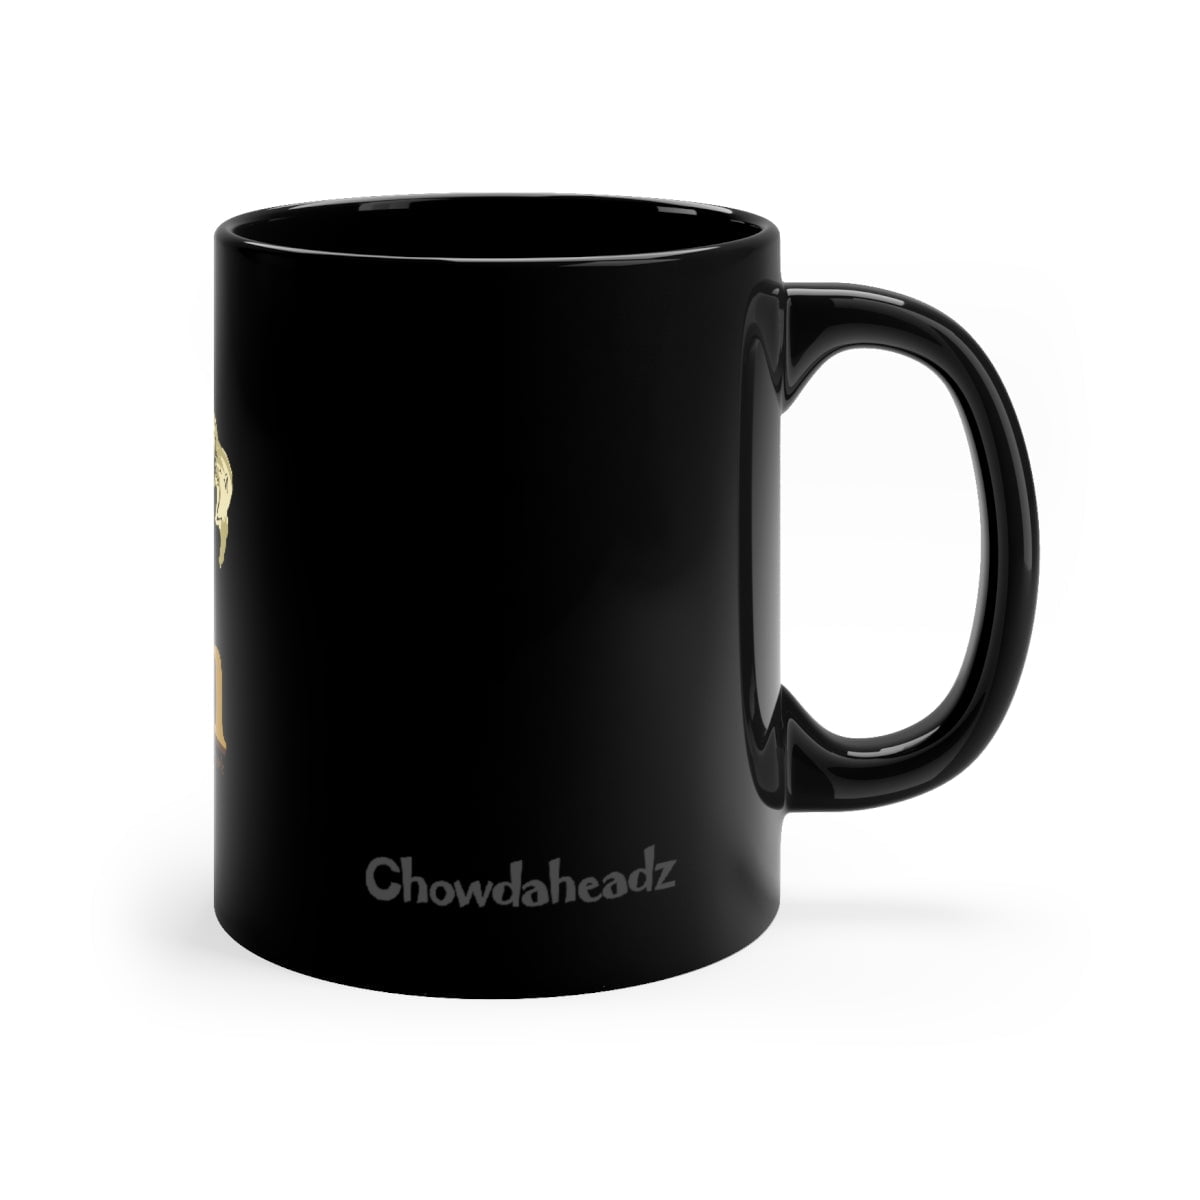 Golden 11oz Coffee Mug - Chowdaheadz